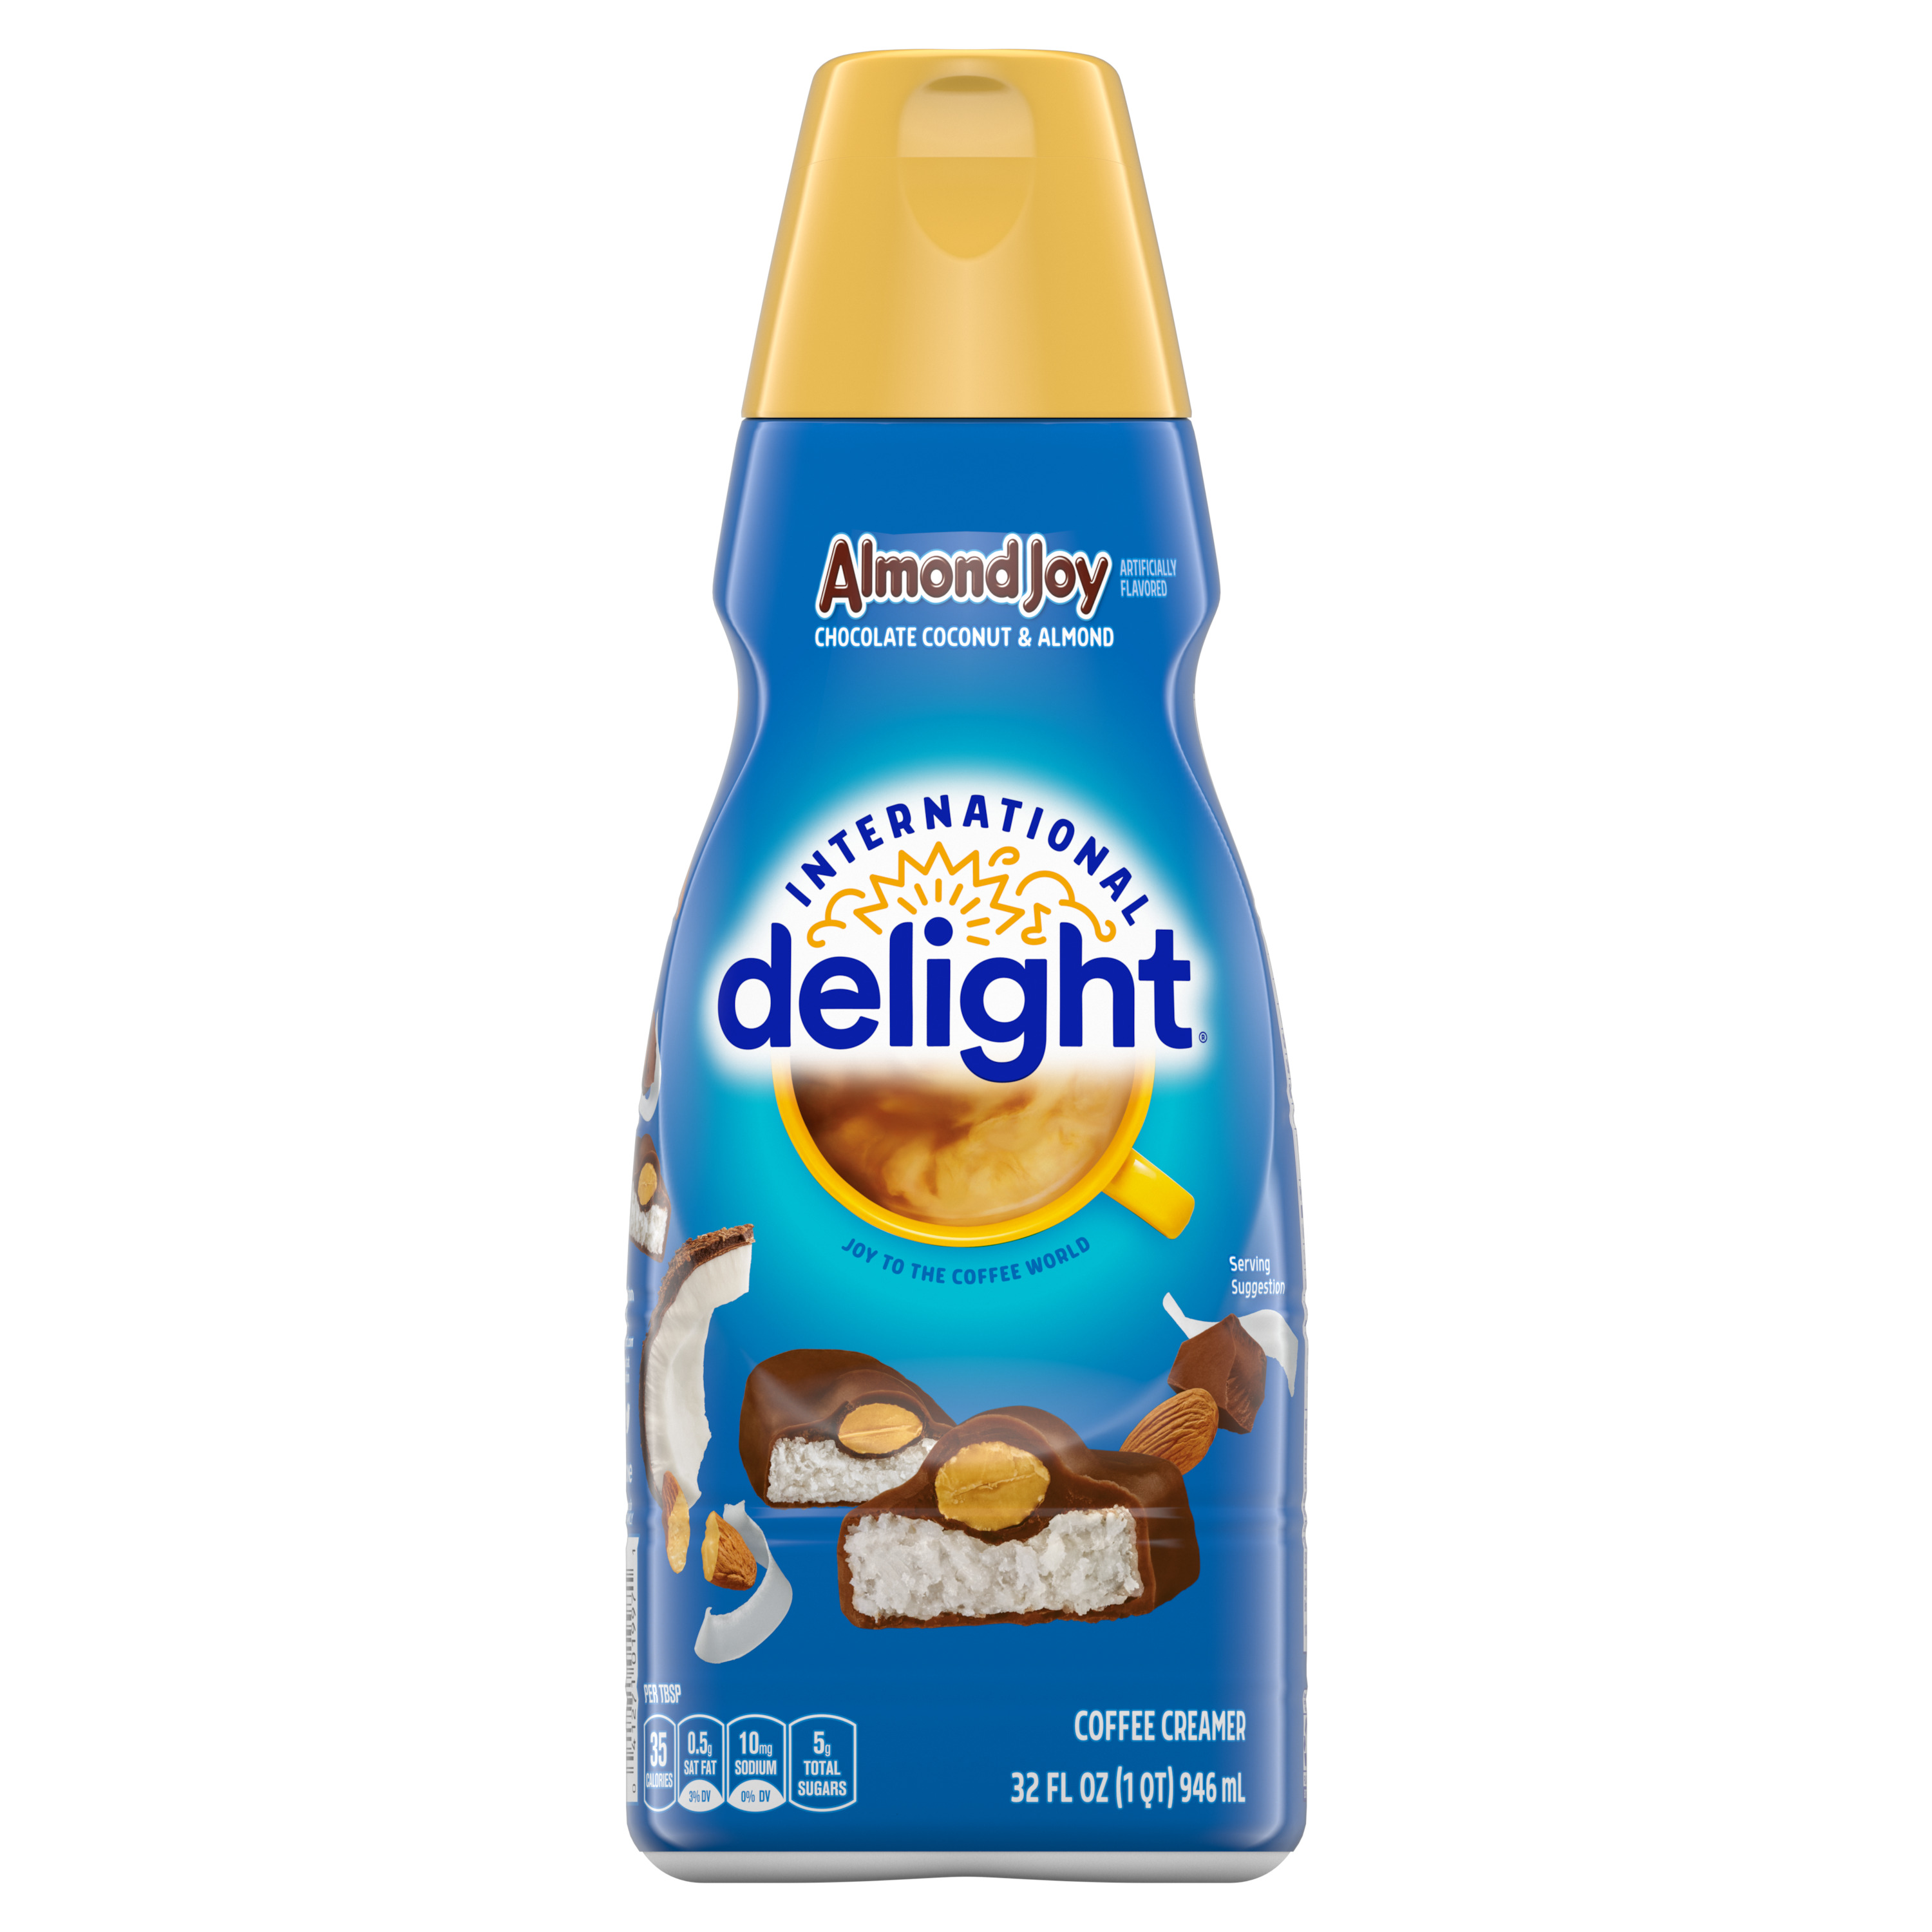 International Delight Coffee Creamer, Almond Joy 6 units per case 32.0 fl